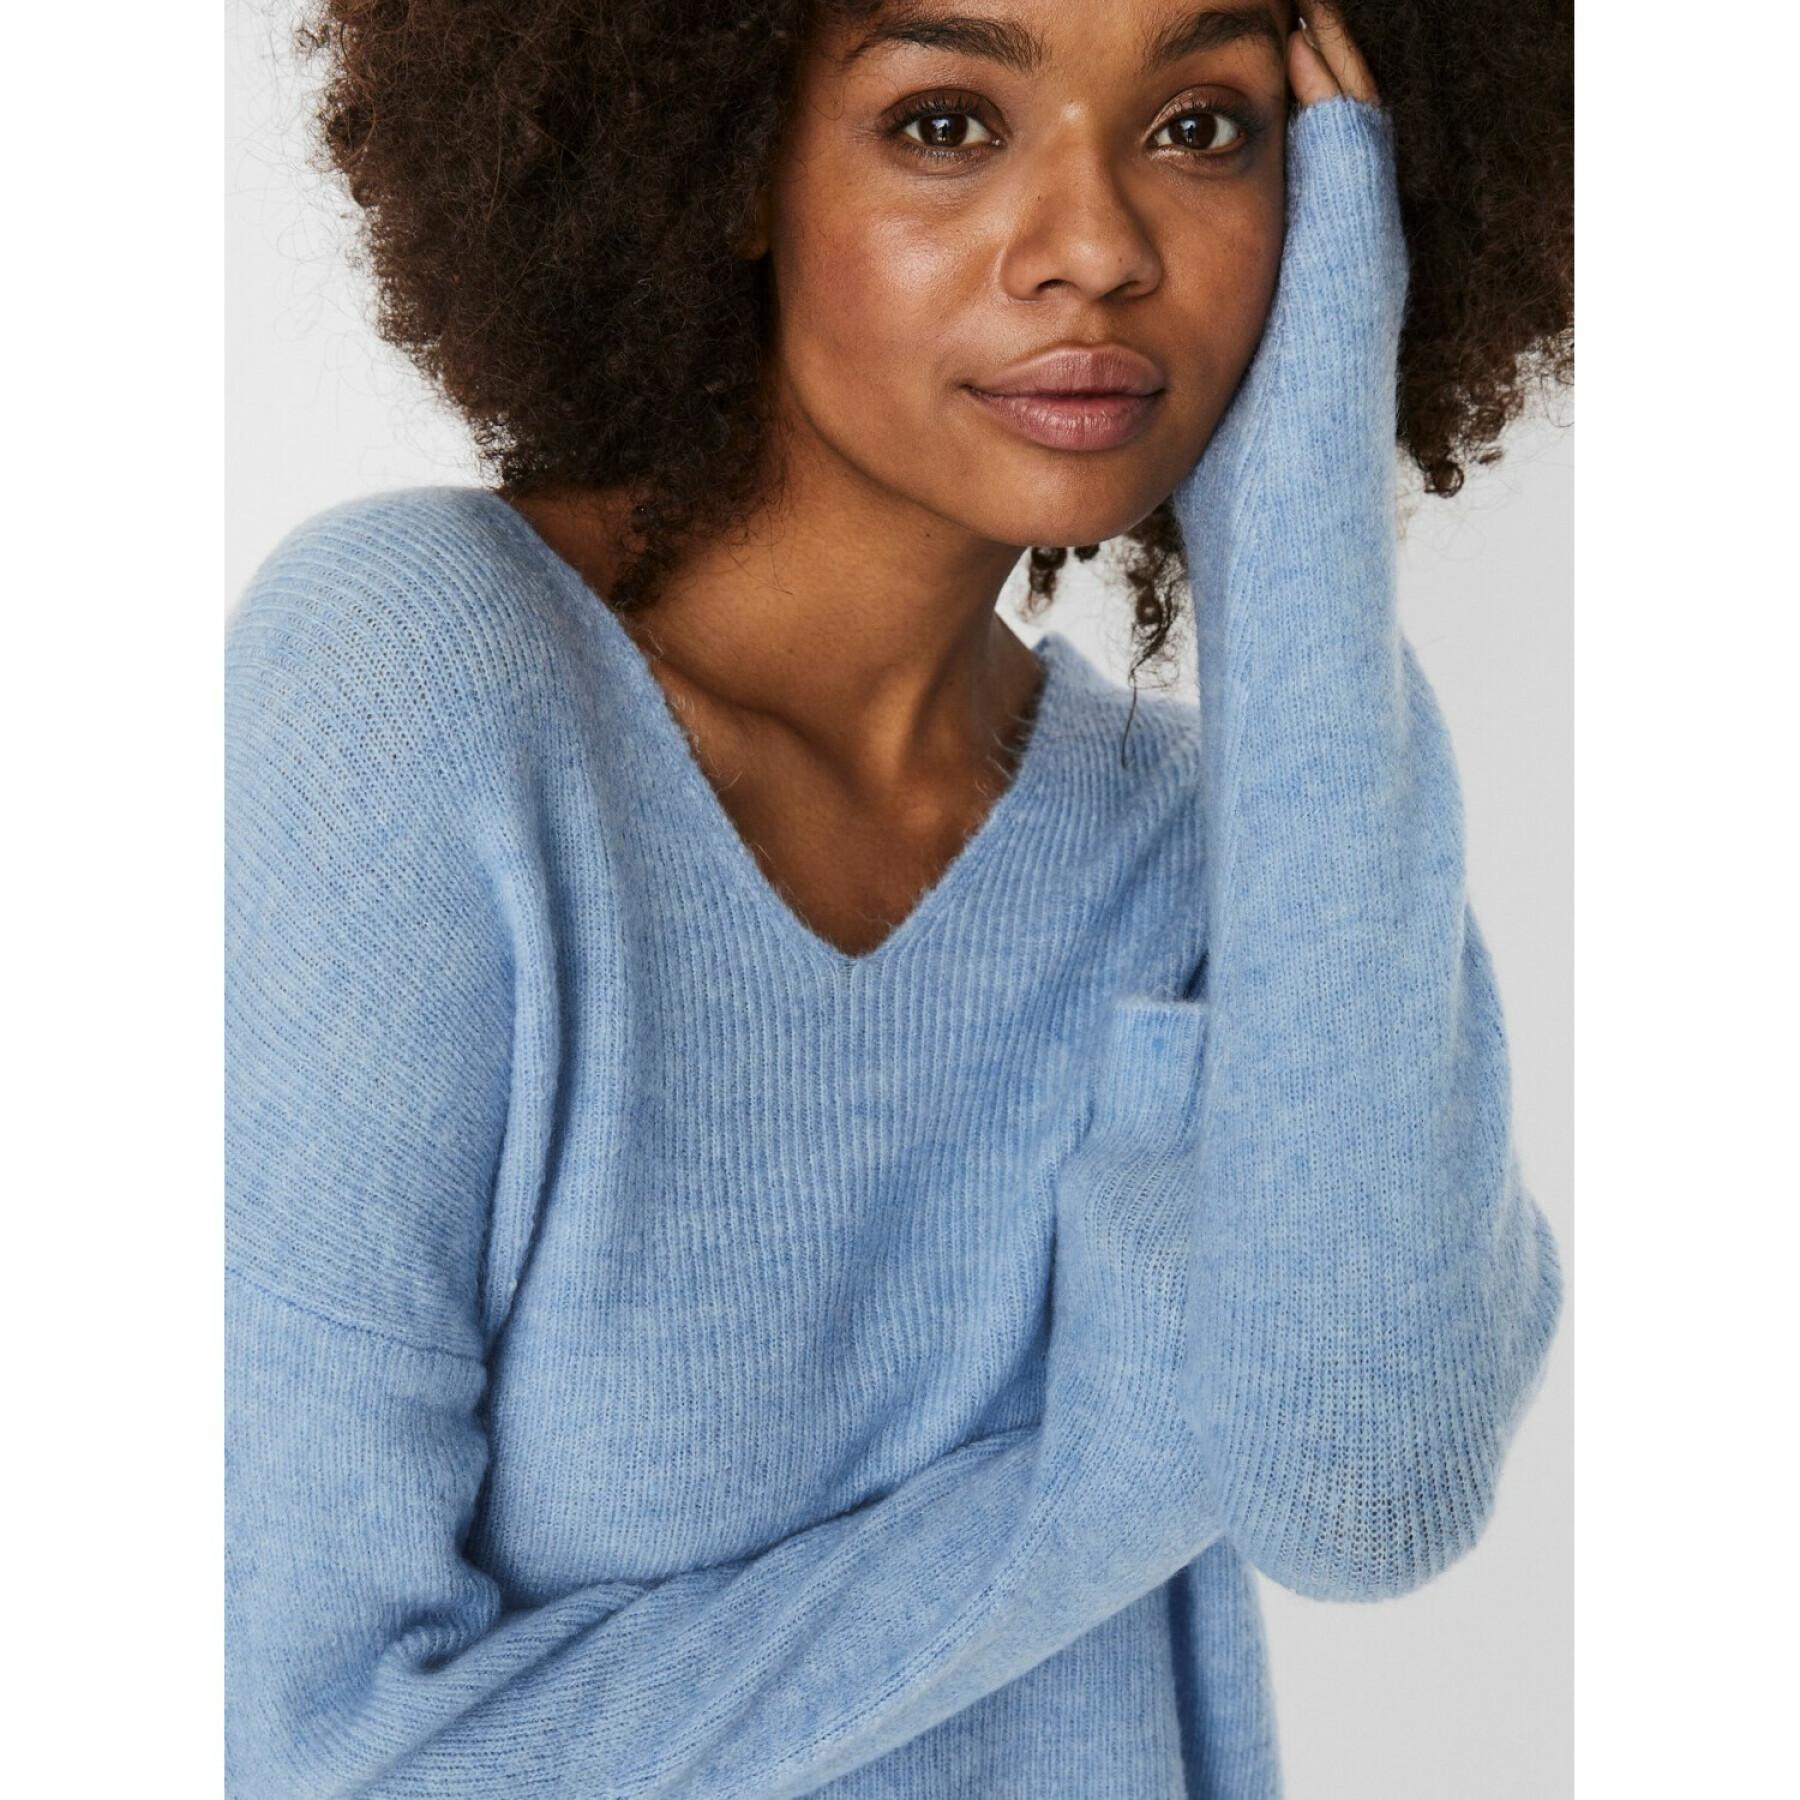 V-neck sweater for women Vero Moda vmcrewlefile